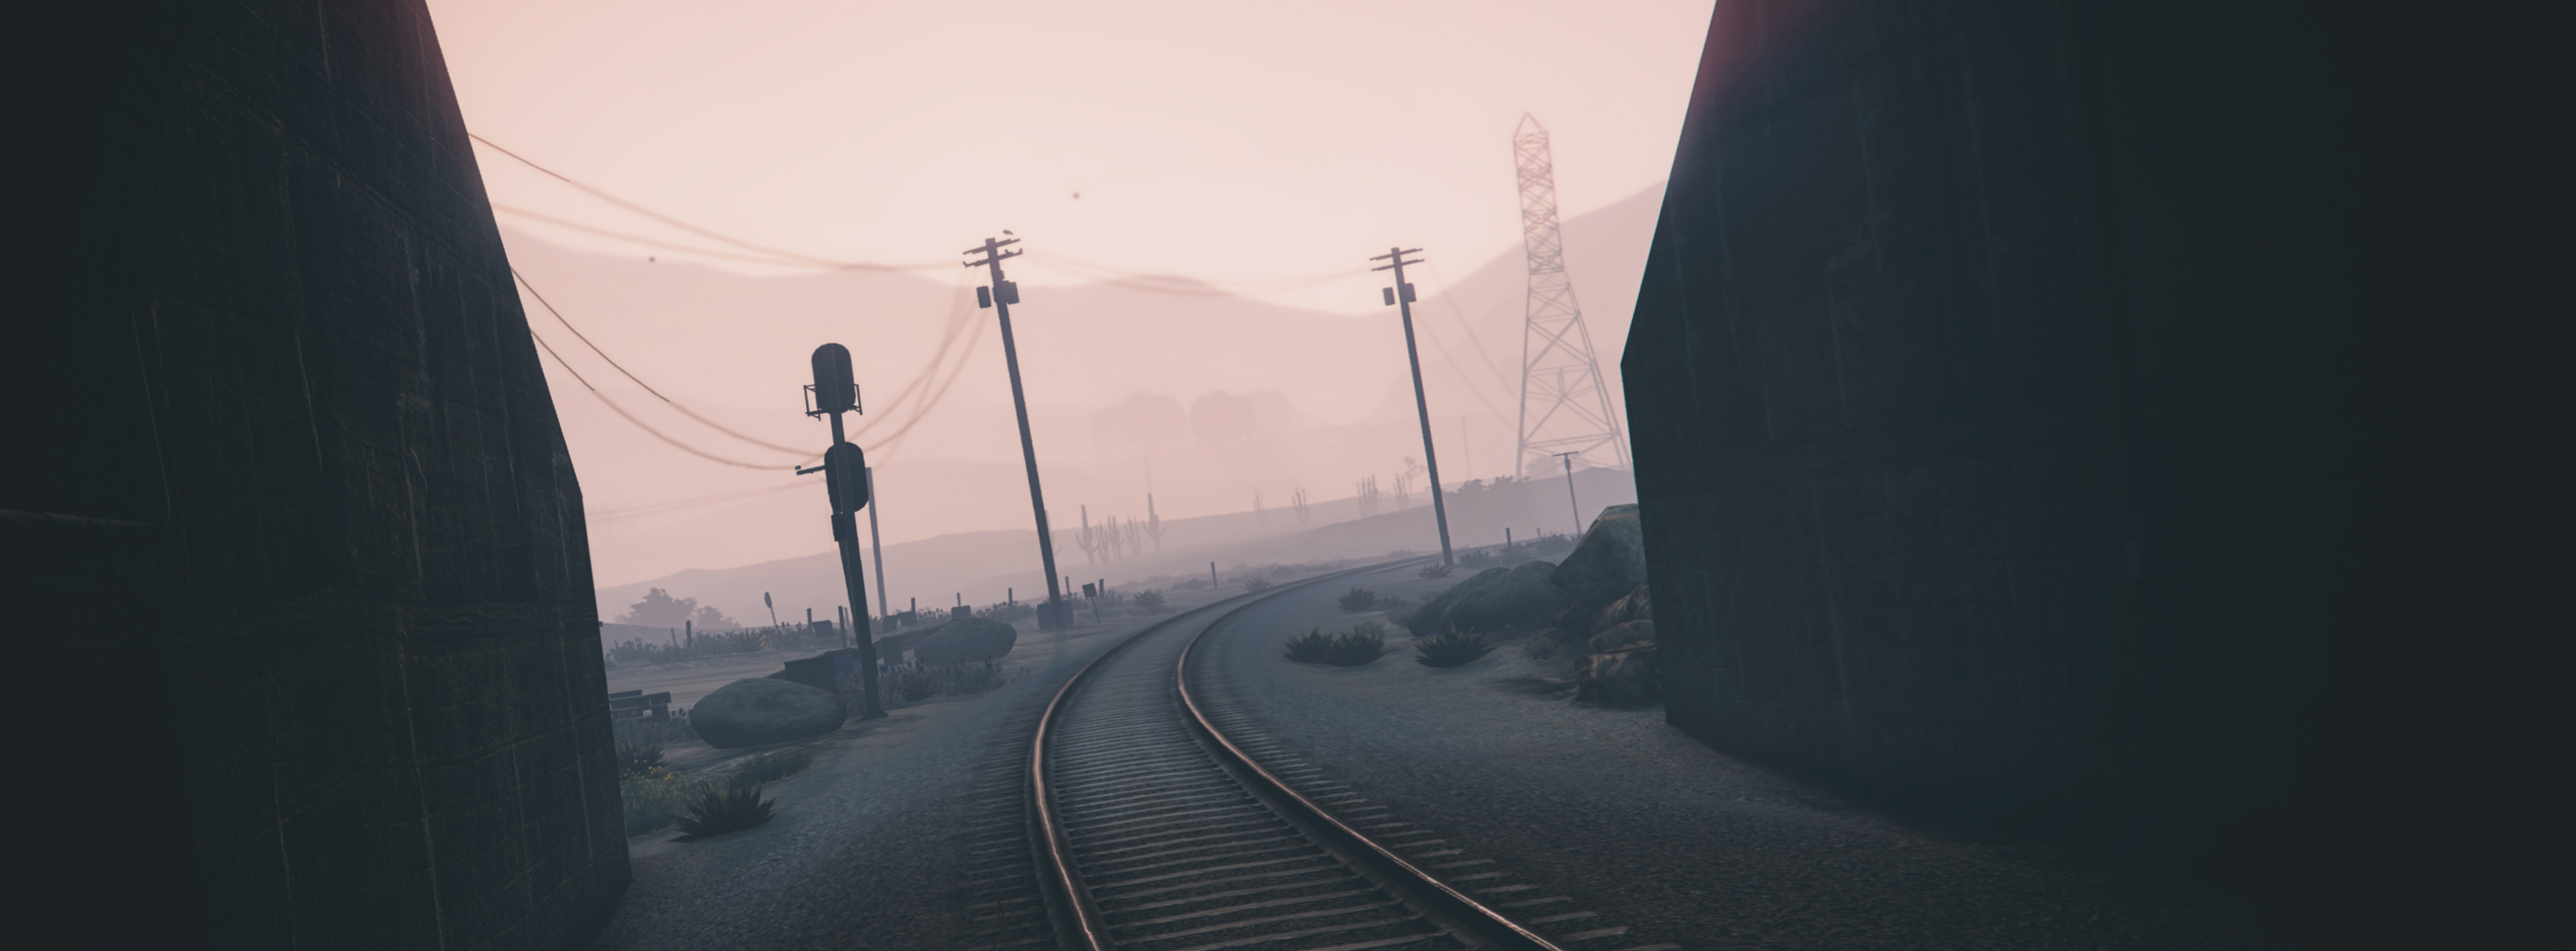 Grand Theft Auto V Railroad 3738x1380